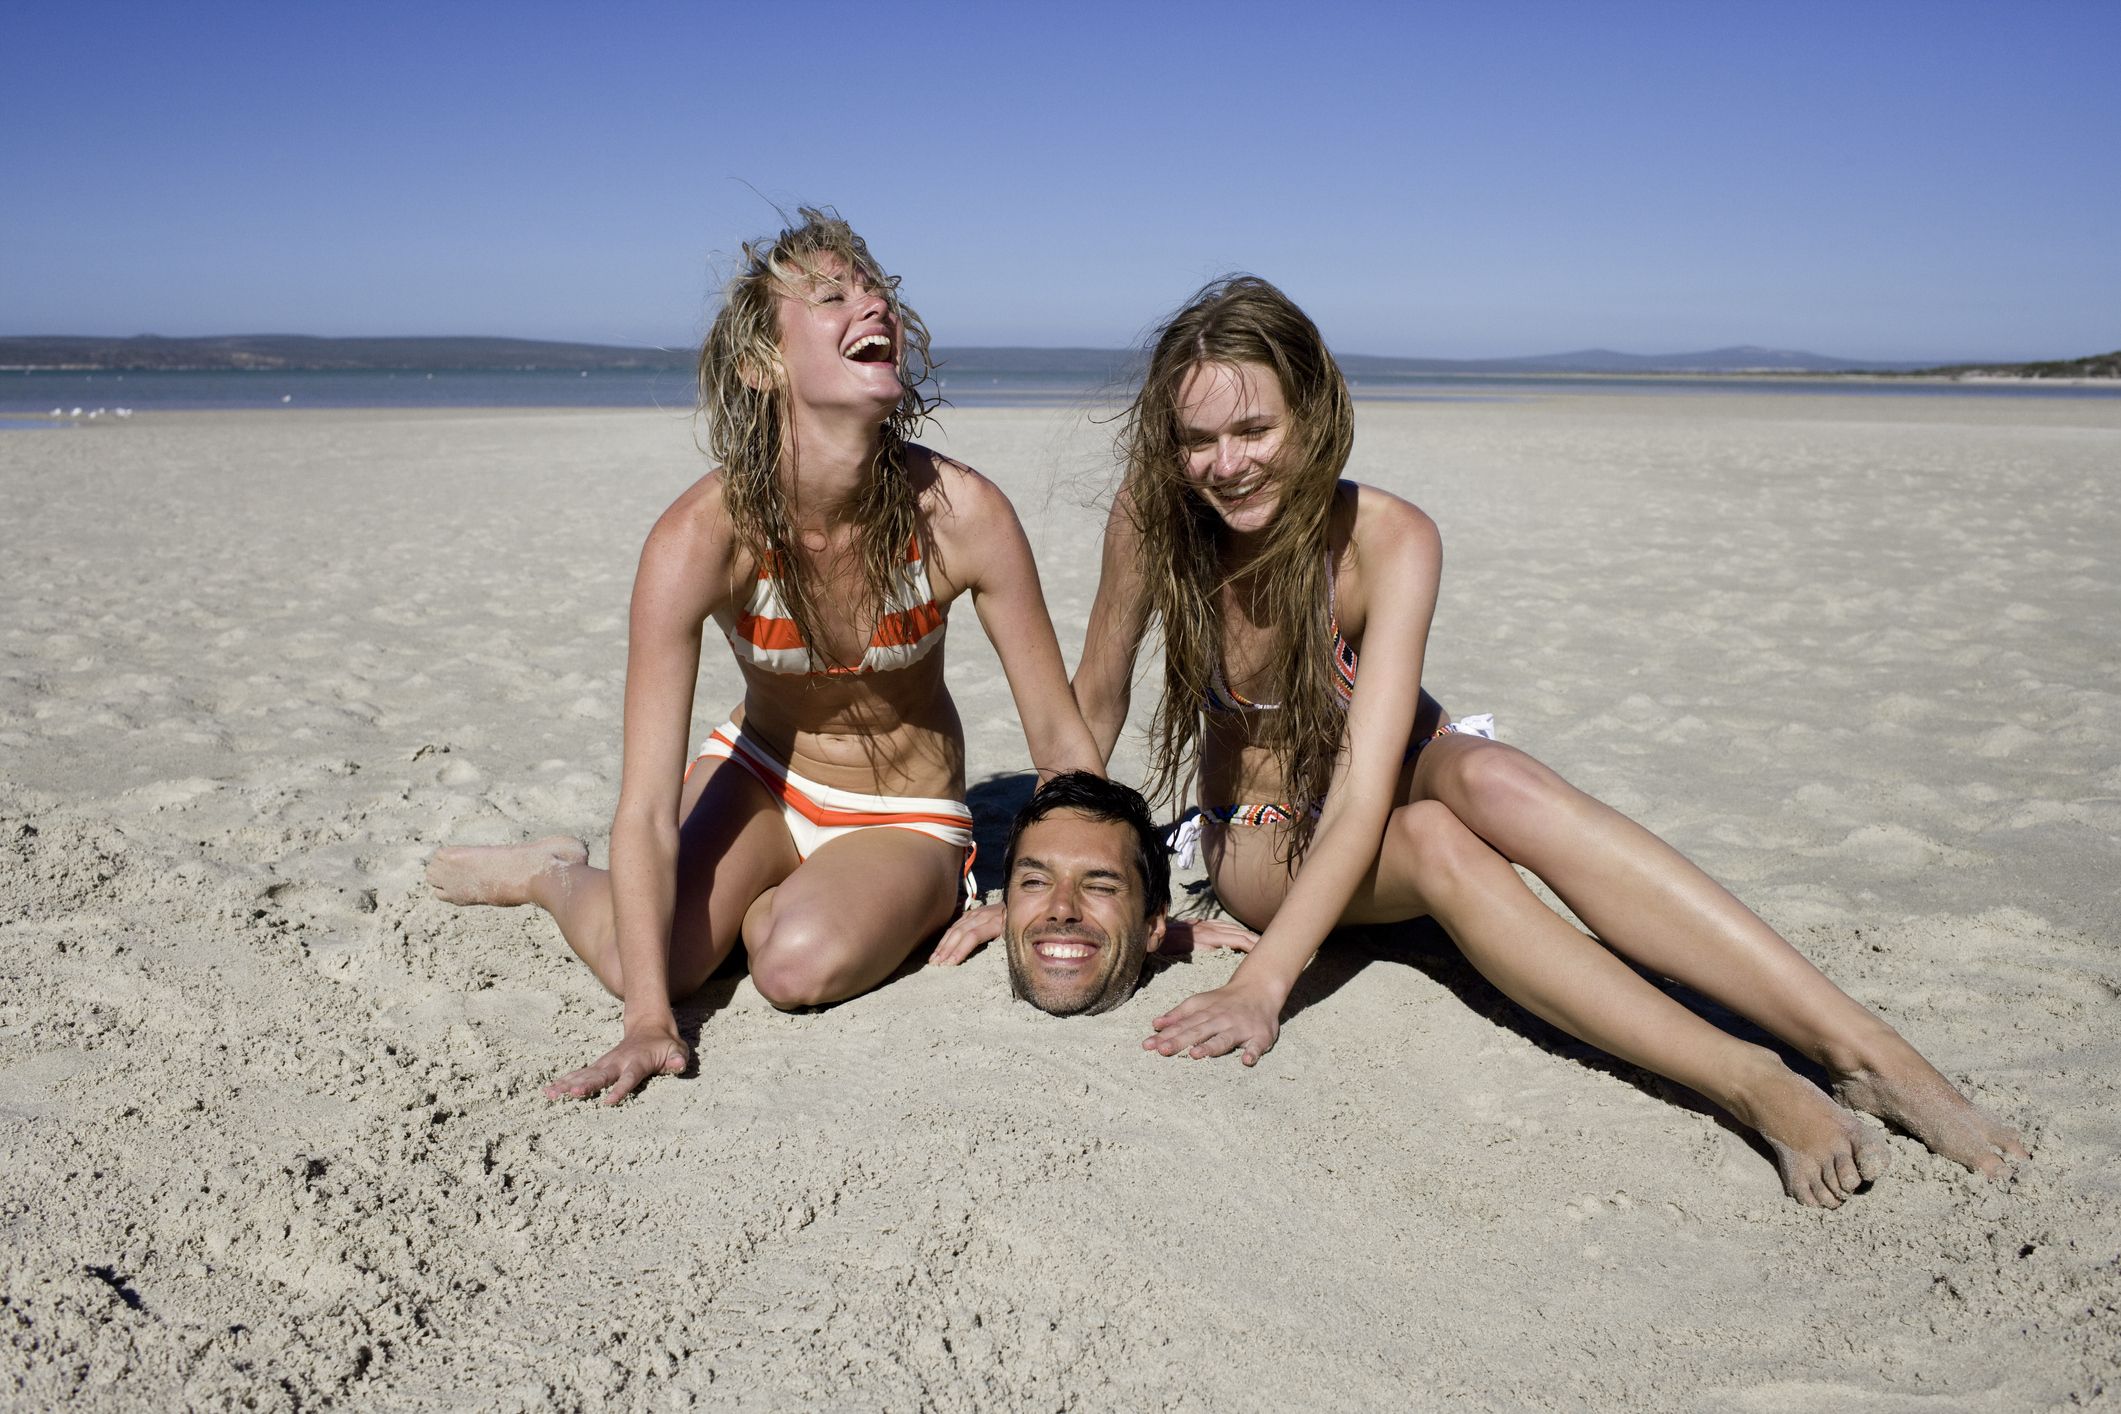 young women burying man in sand laughing royalty free image 1677187269